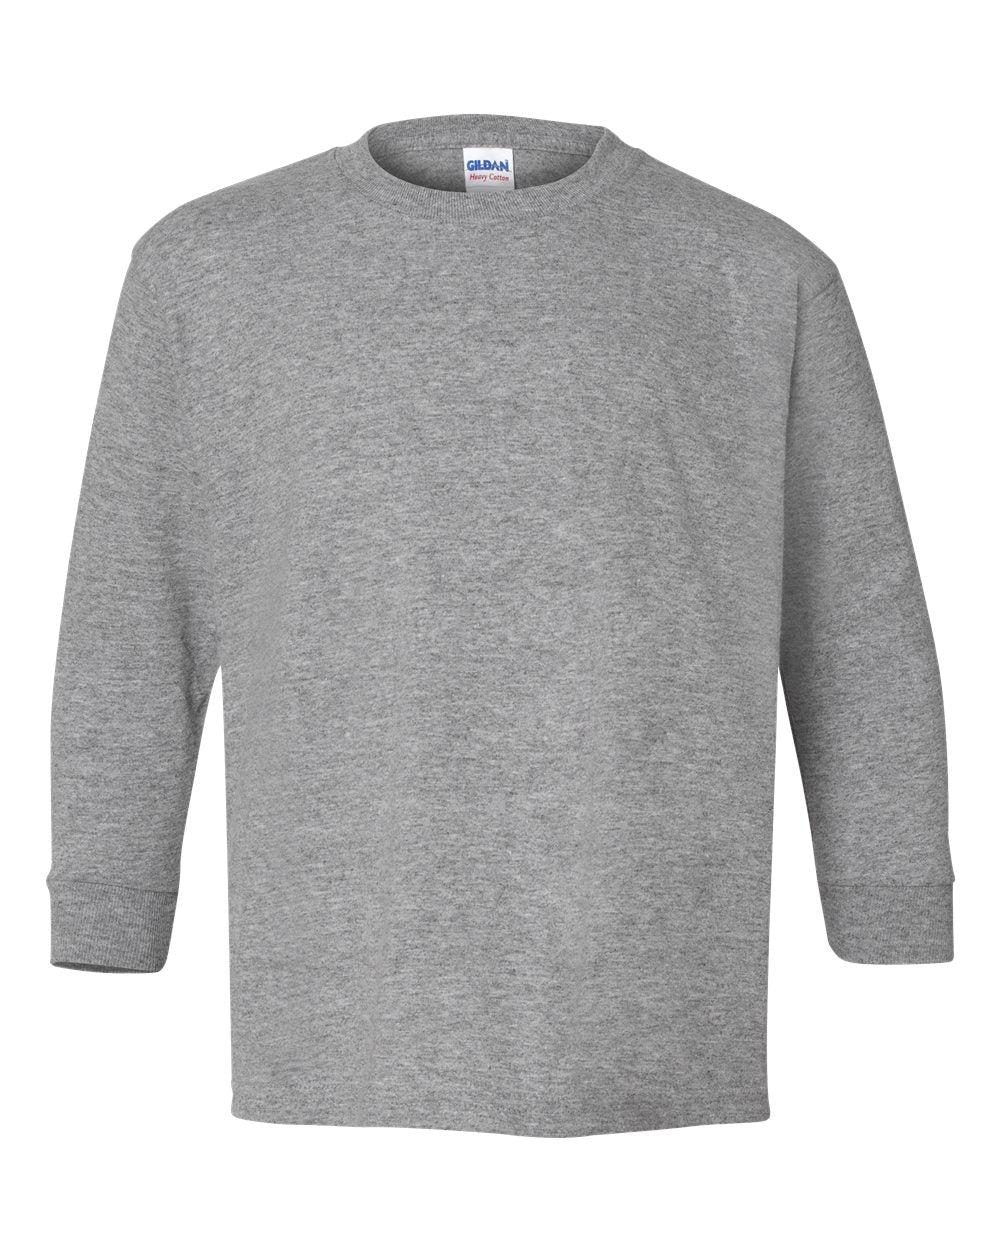 Gildan Youth Long Sleeve (5400b) in Sport Grey